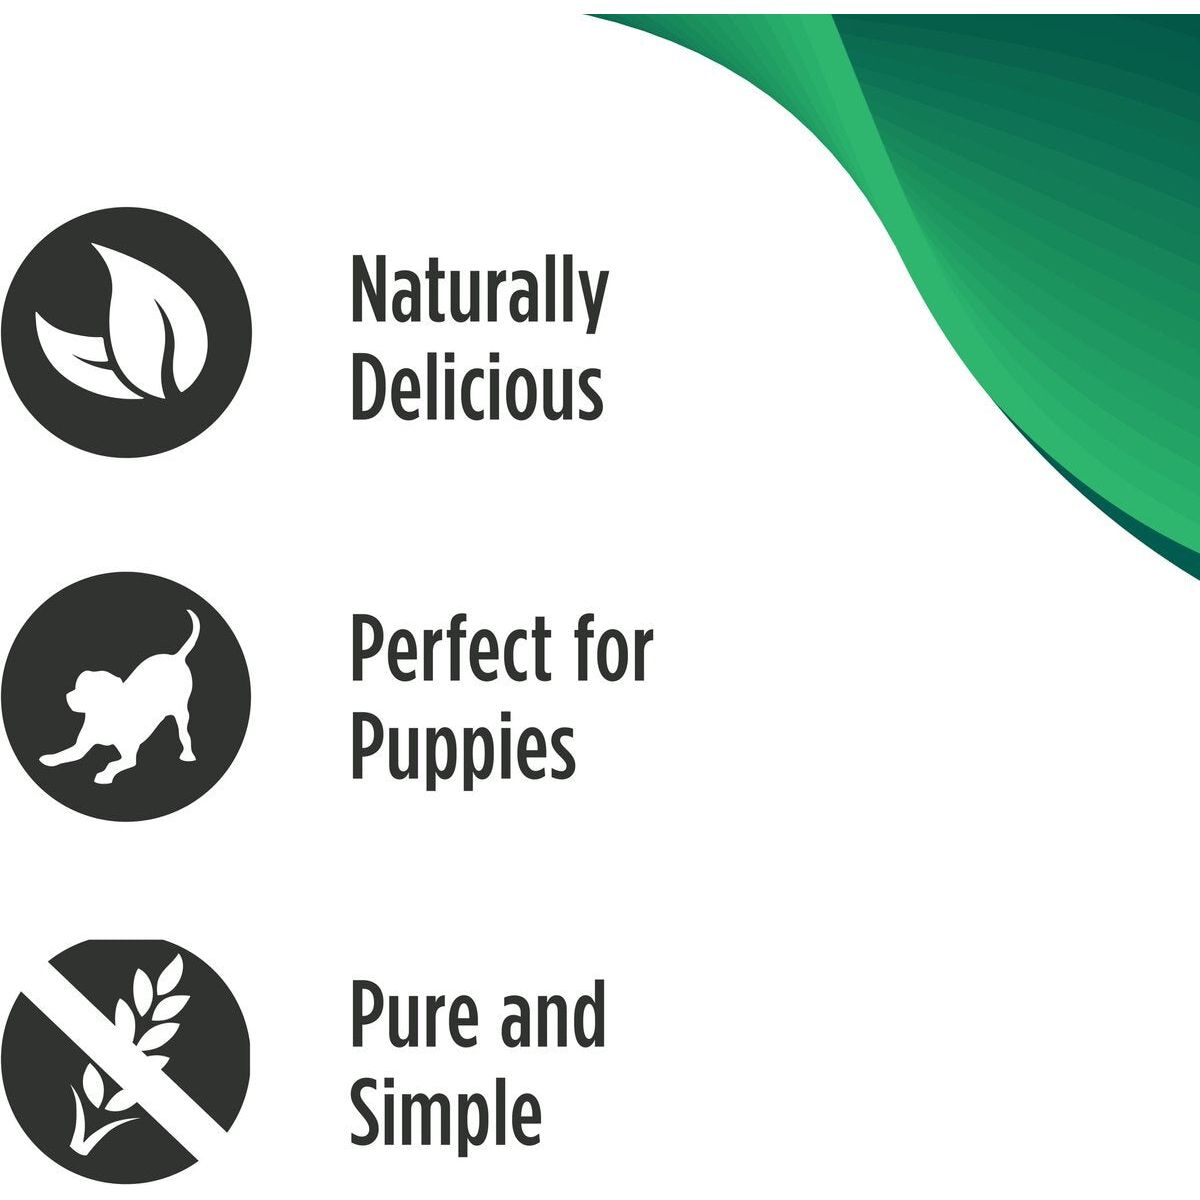 Nulo Freestyle Duck Recipe Grain-Free Dog Training Treats  Dog Treats  | PetMax Canada